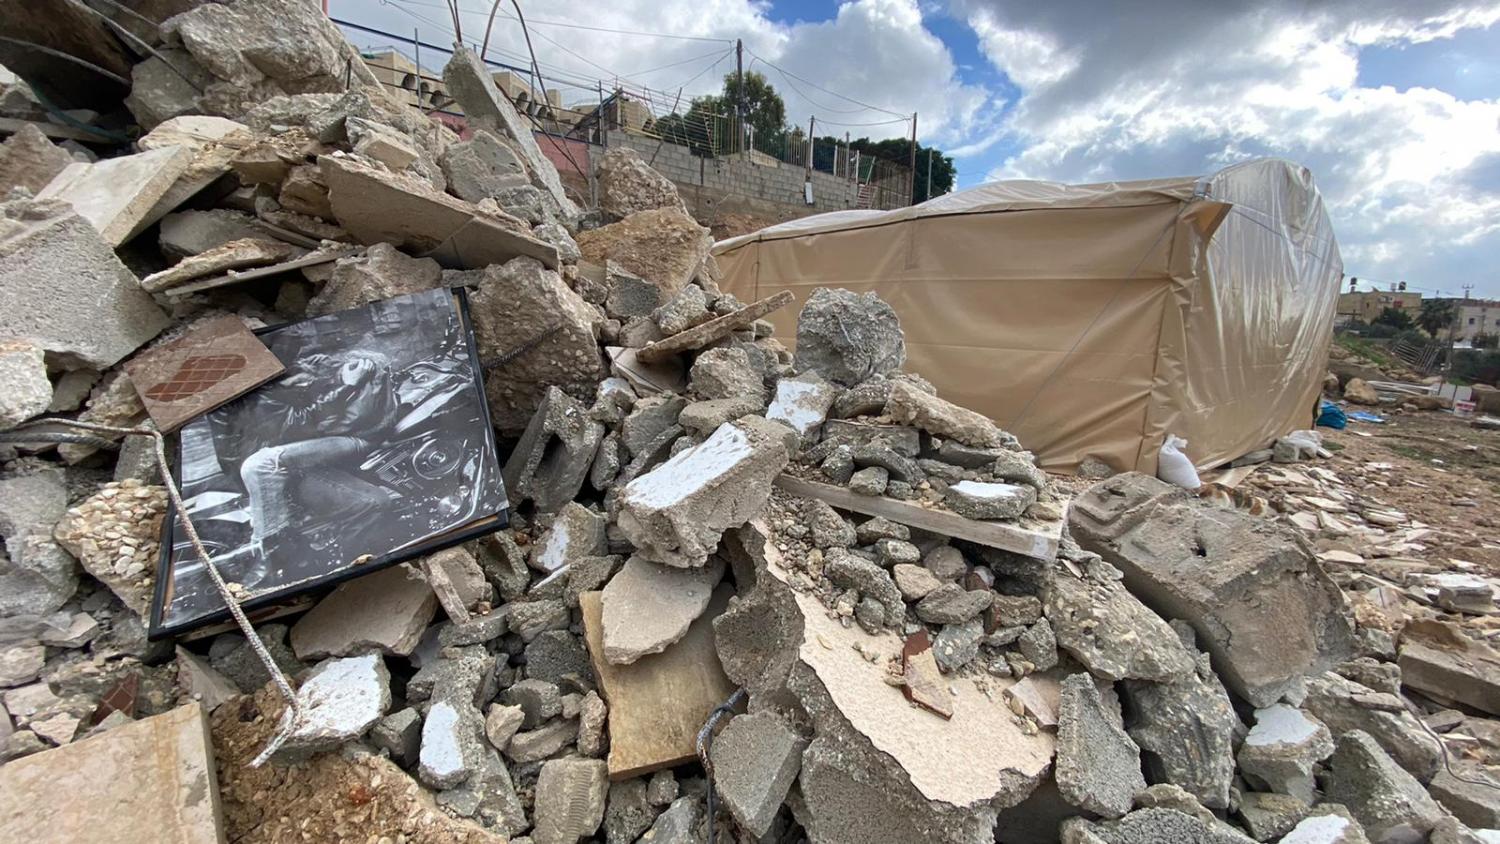 The rubble of Sophia's Jerusalem home after demolition